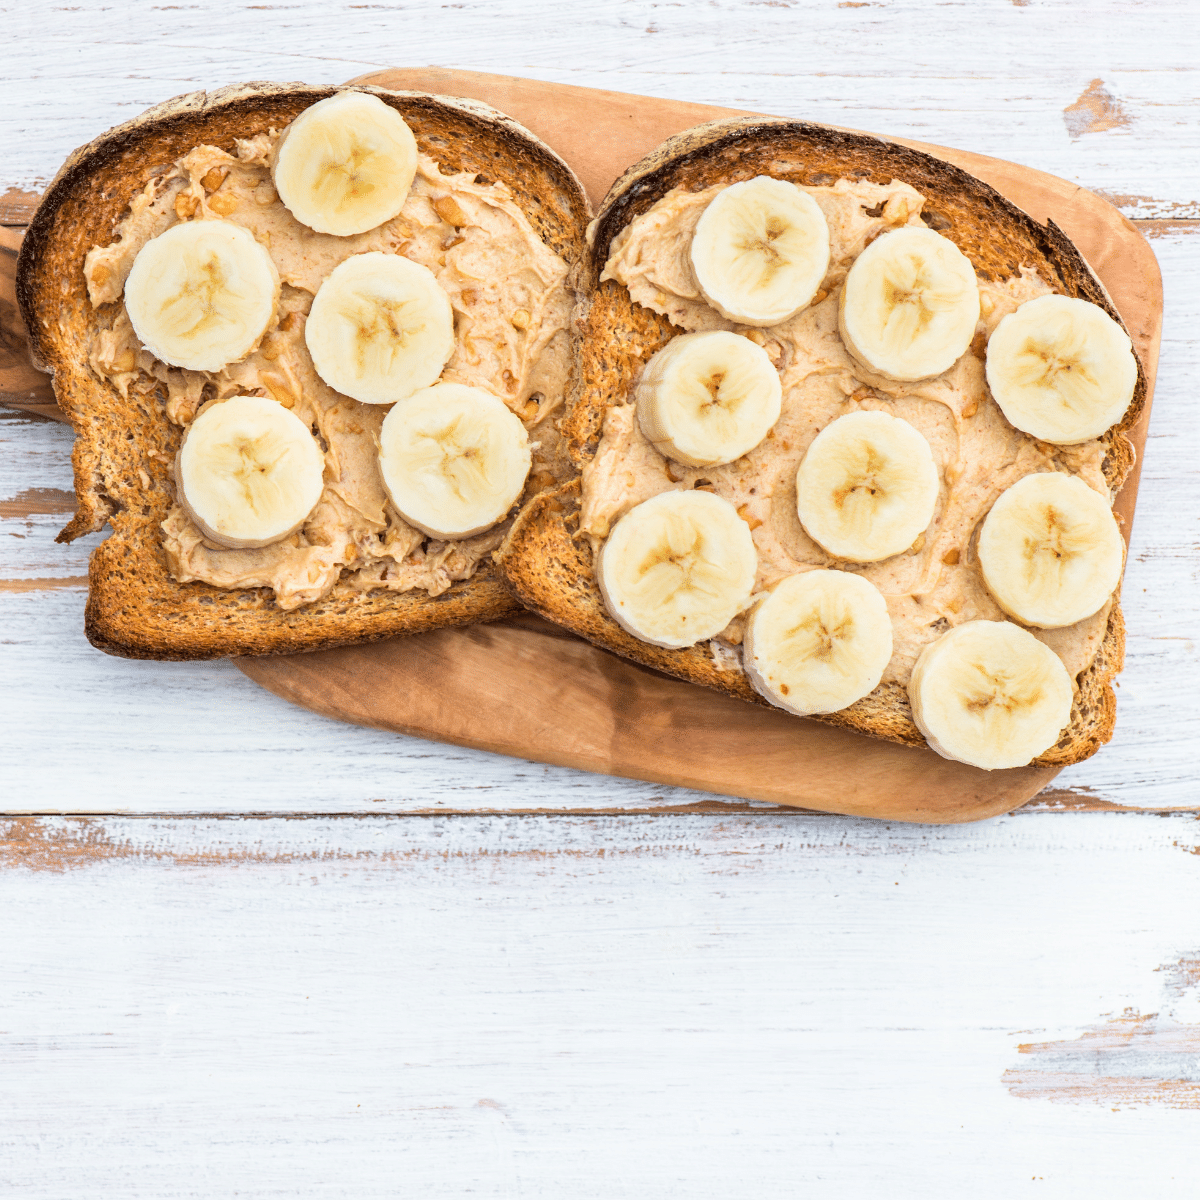 Whole grain peanut butter banana toast on a wooden board